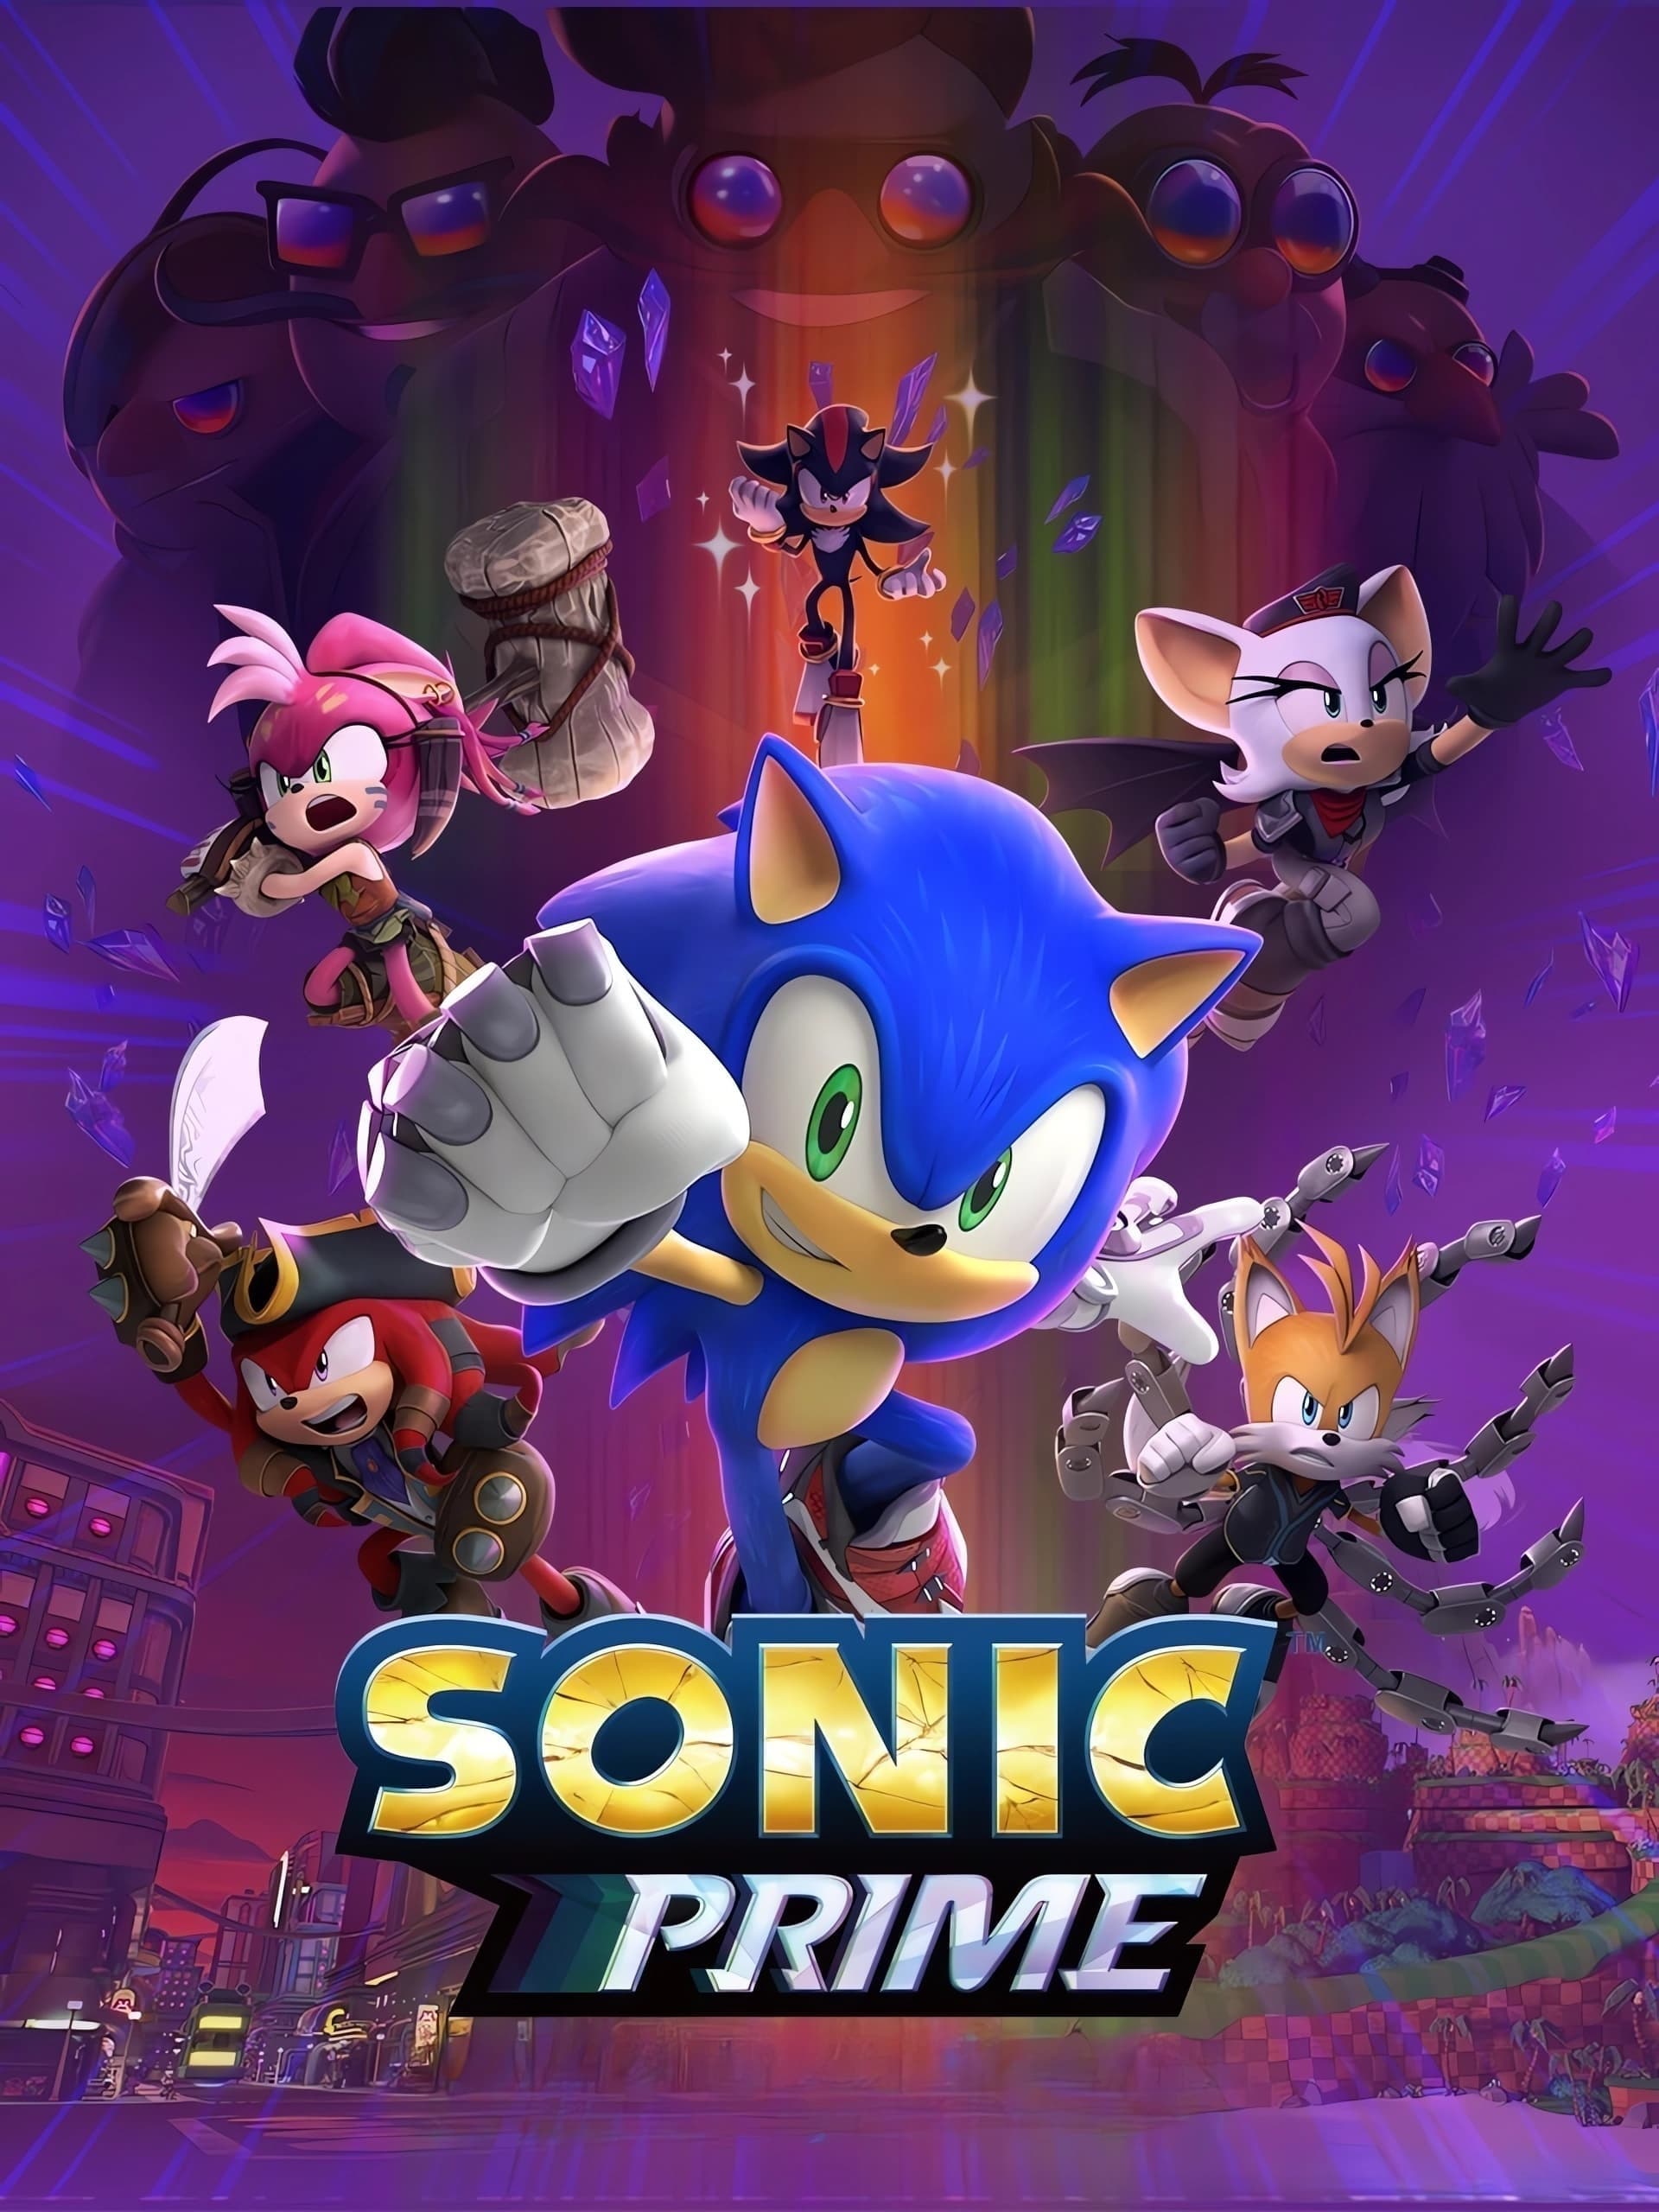 سونیک پرایم (Sonic Prime)